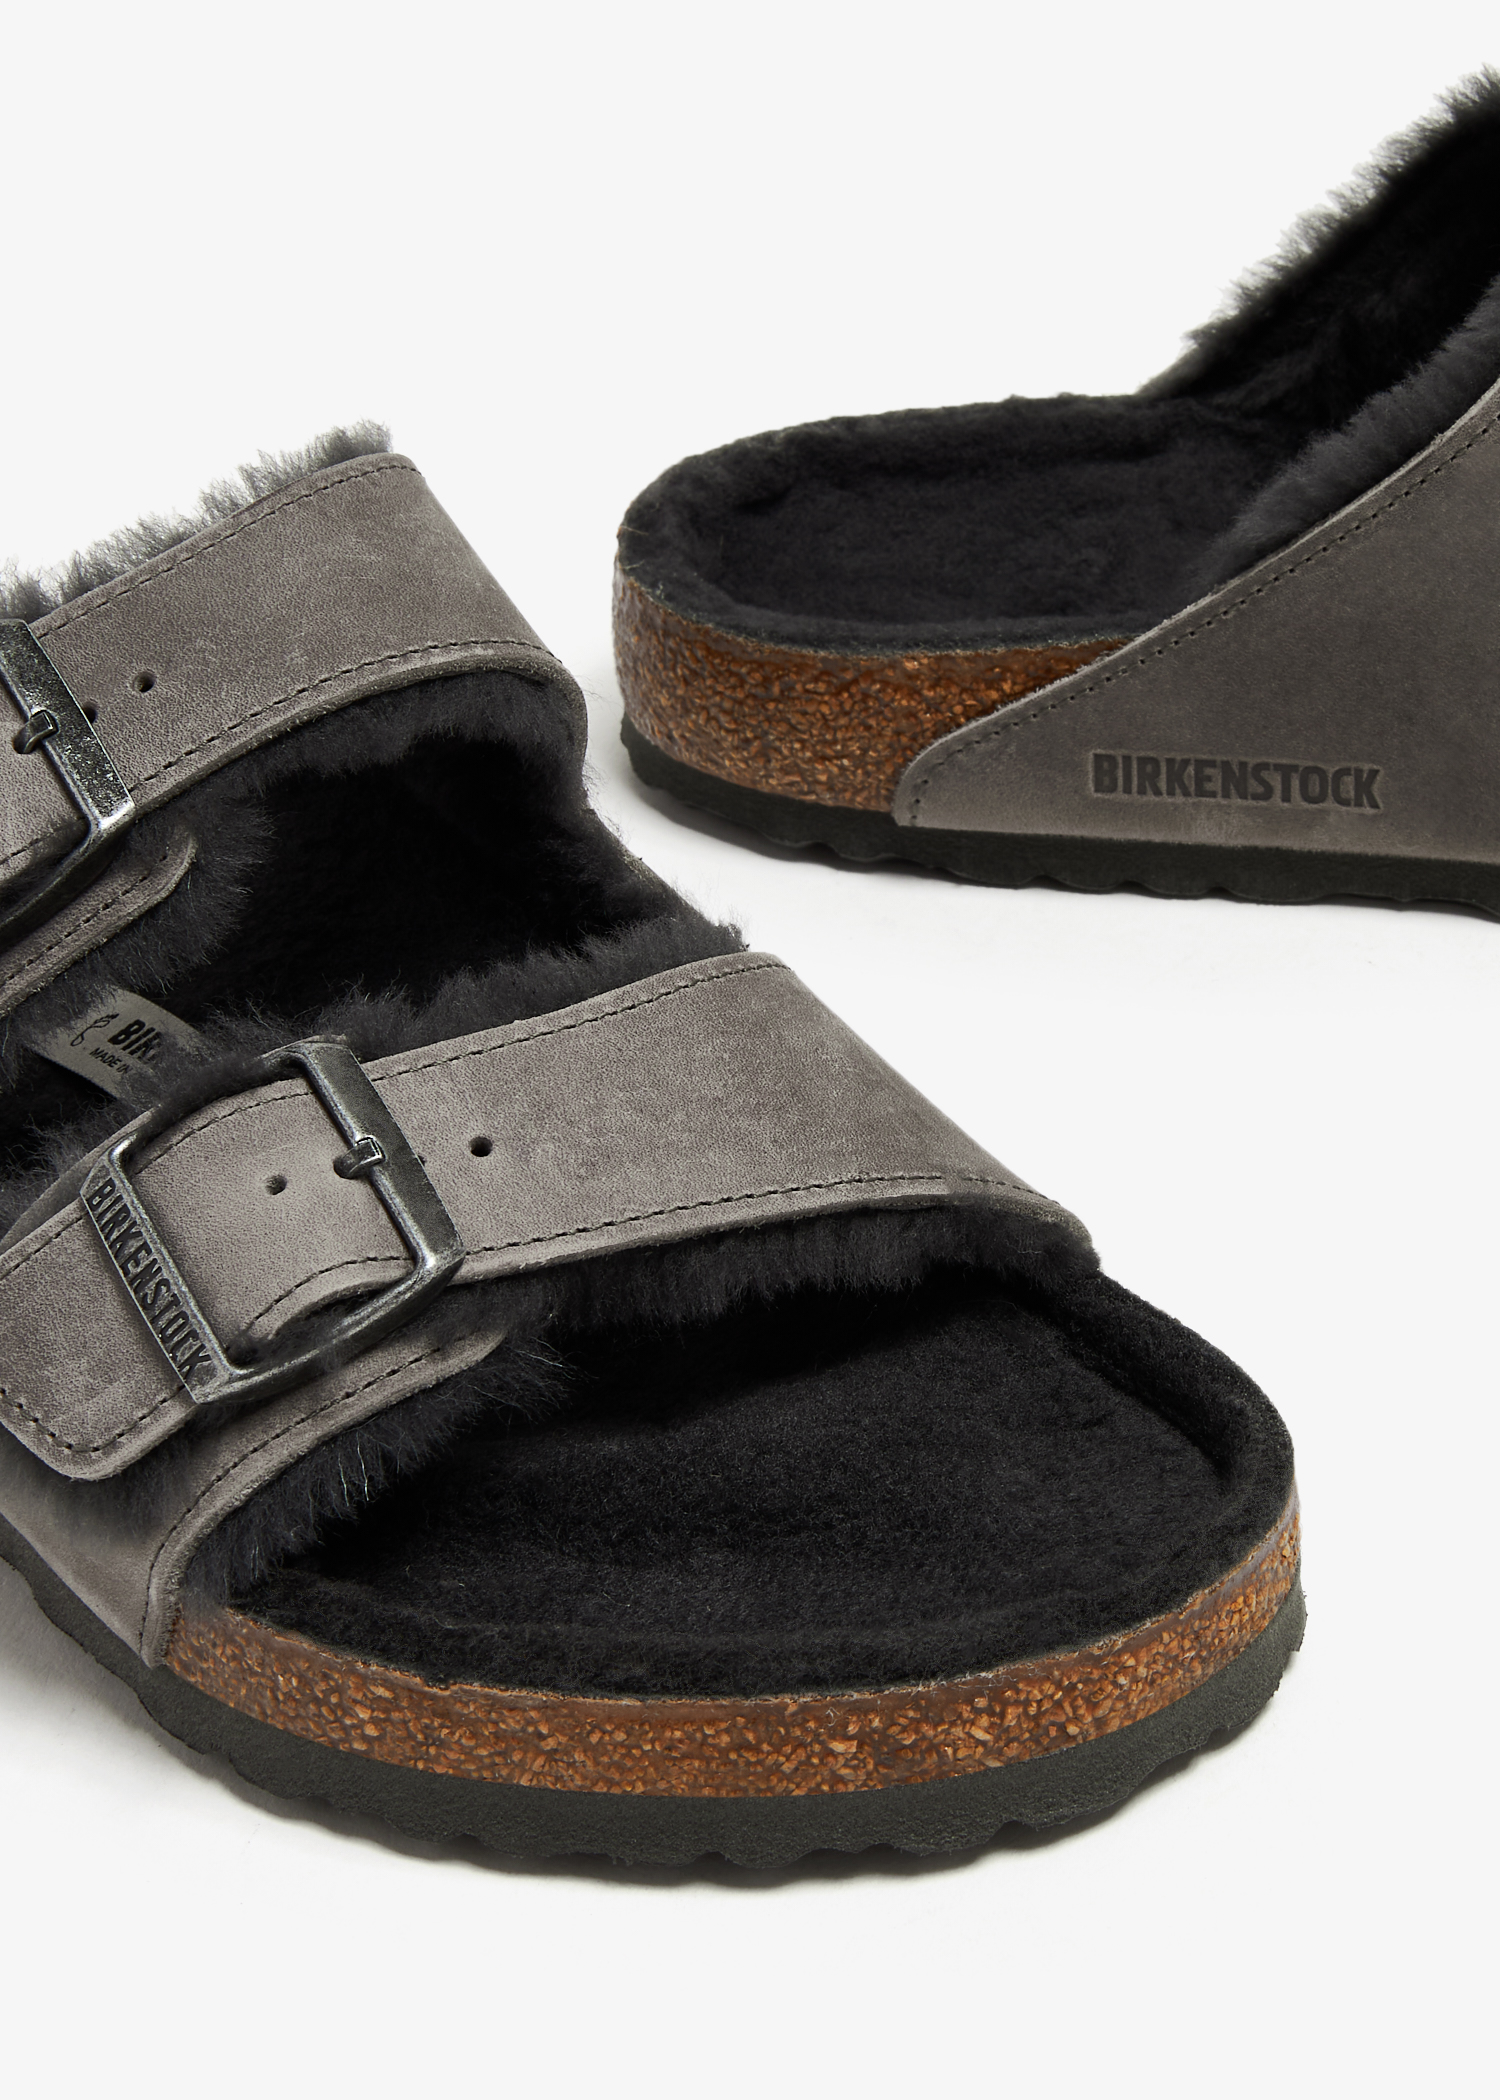 Birkenstock Arizona sandals for Men - Grey in UAE | Level Shoes